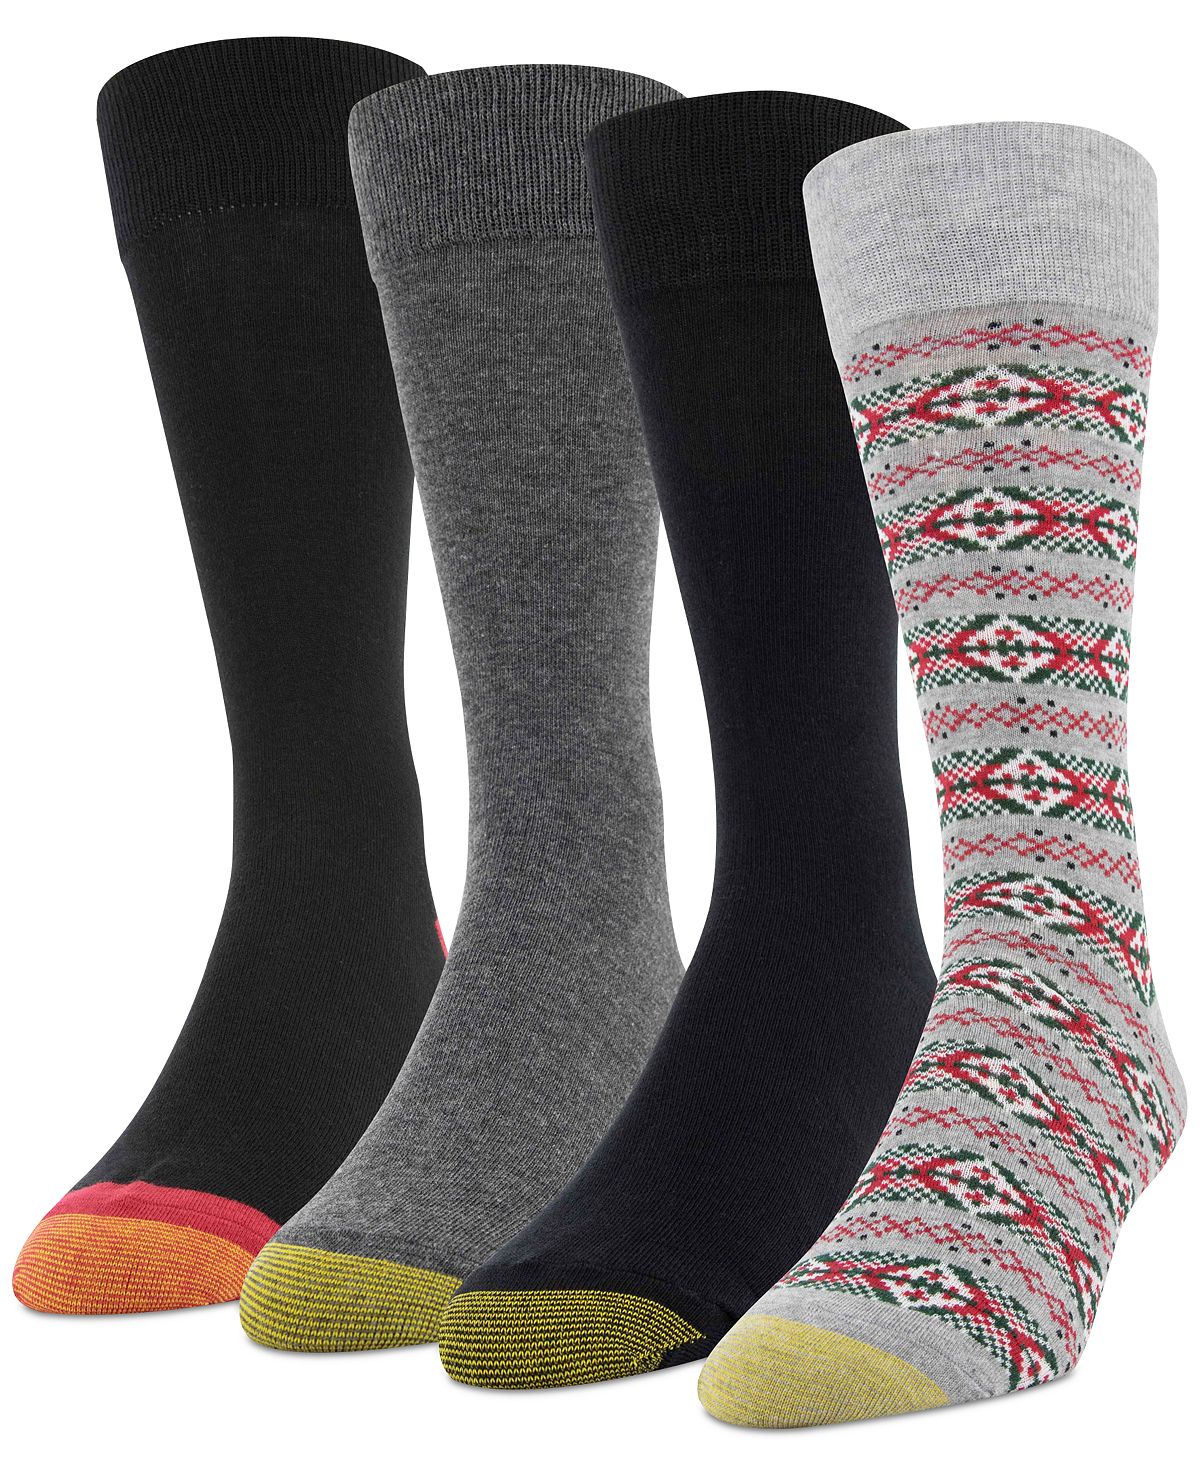 Gold Toe 4-pack Christmas Fairisle Socks Grey, Black, Charcoal, Black-red